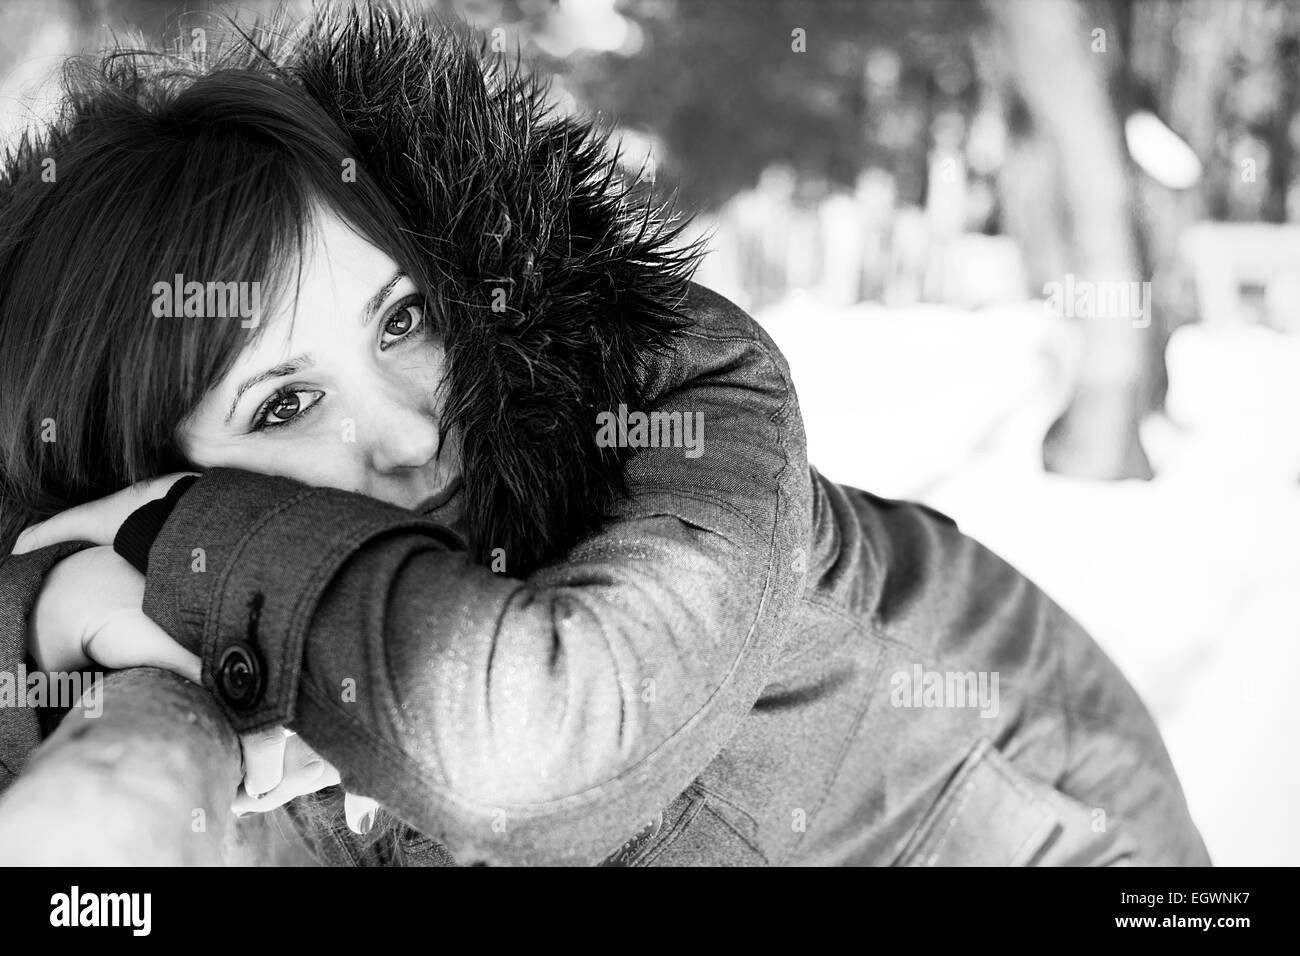 Closeup portrait of a pretty woman in winter in grayscale Stock Photo